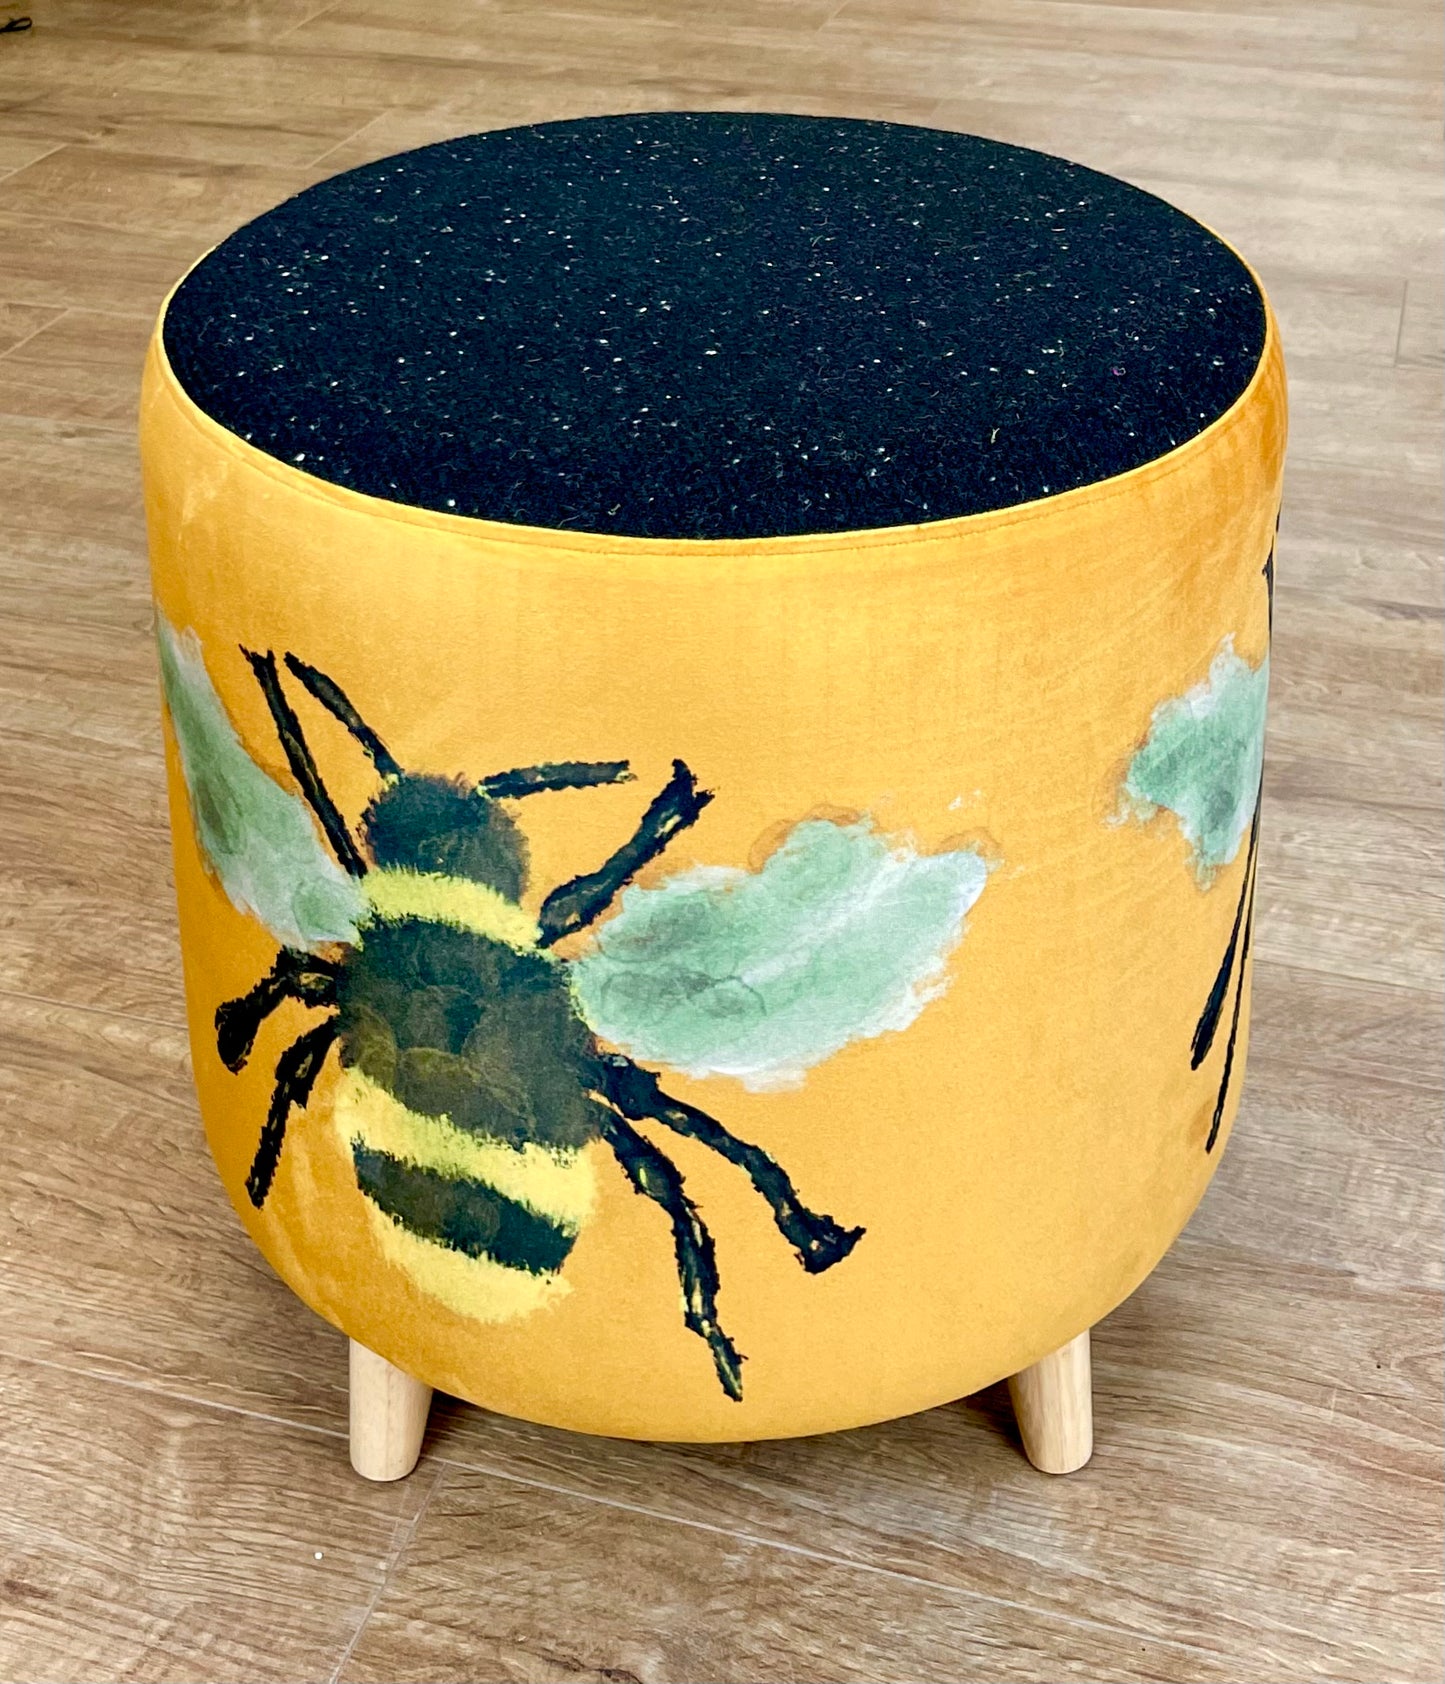 Bumble Bee Footstool with Black Speckled Harris Tweed Top Detail